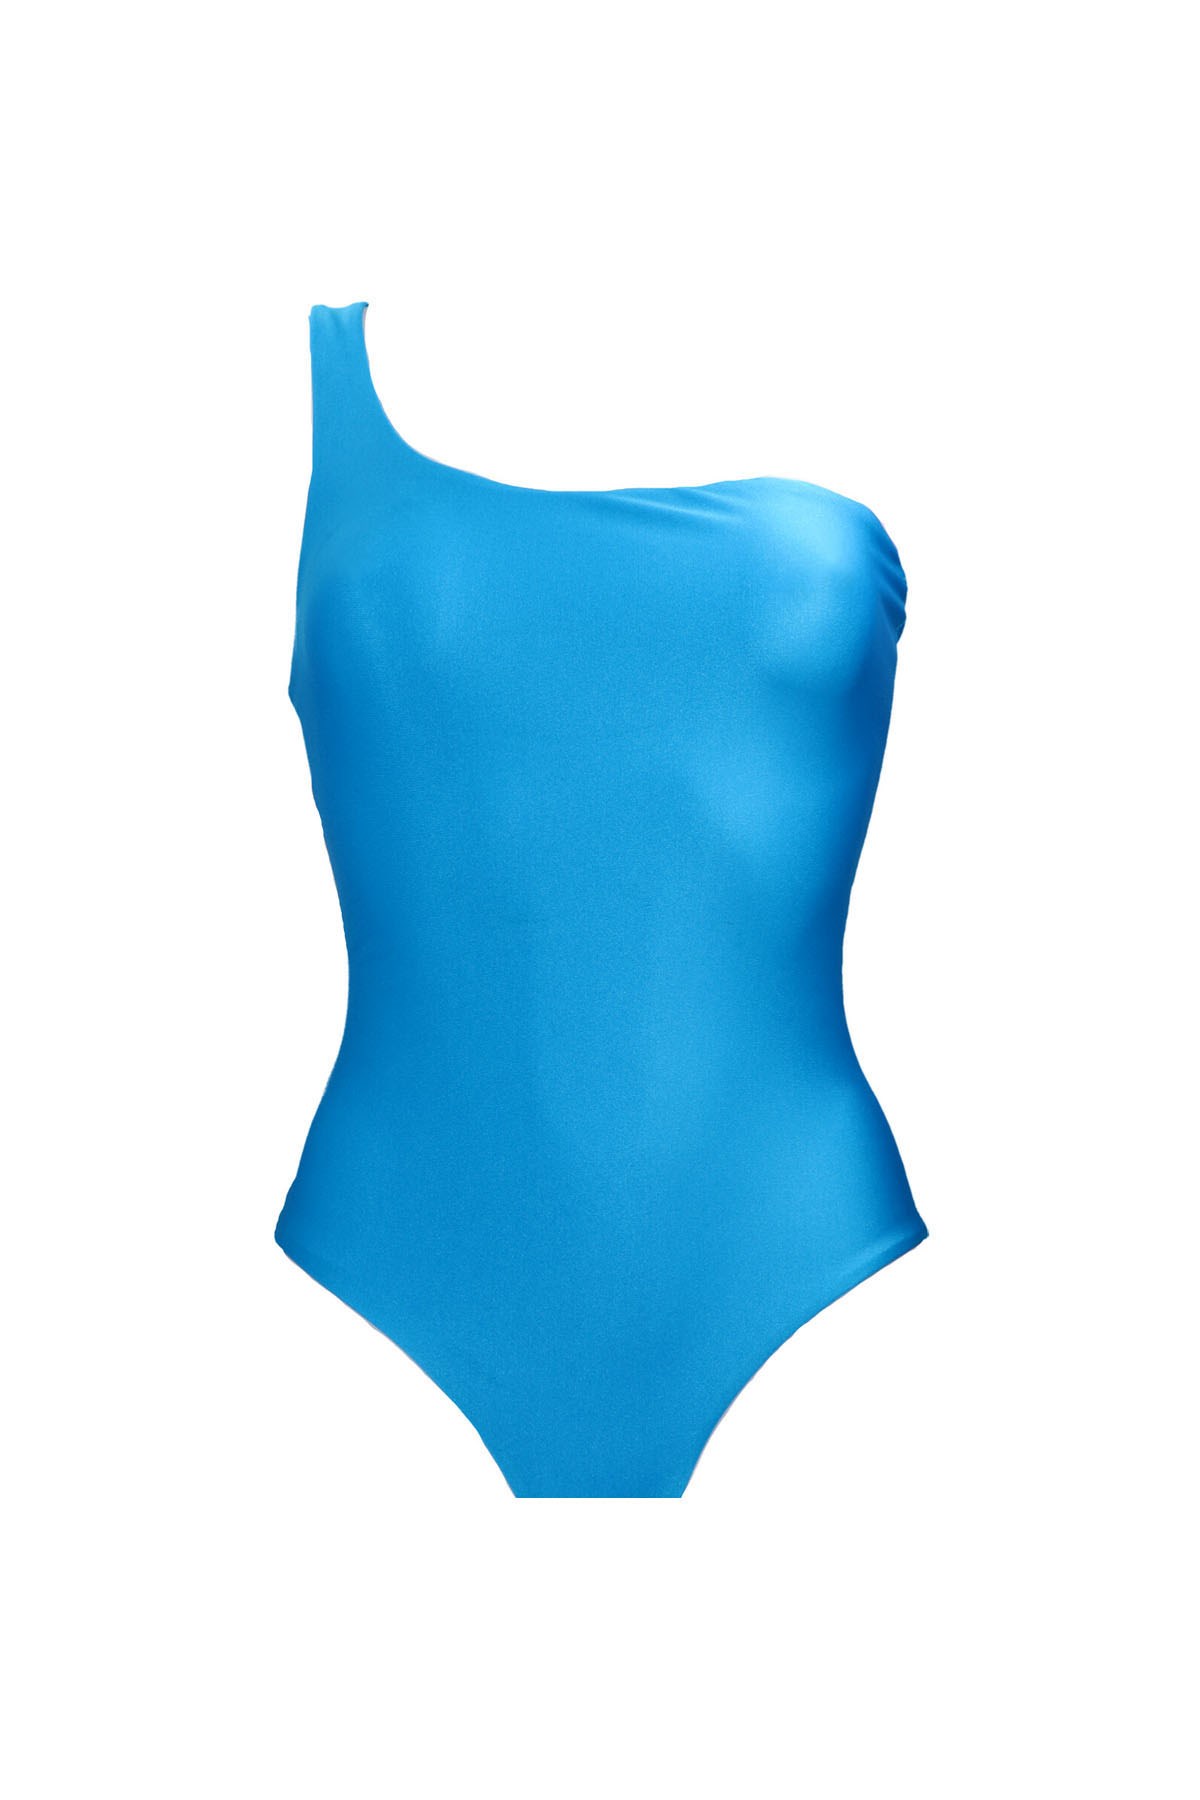 JADE SWIM 'Apex One Shoulder’ One-Piece Swimsuit